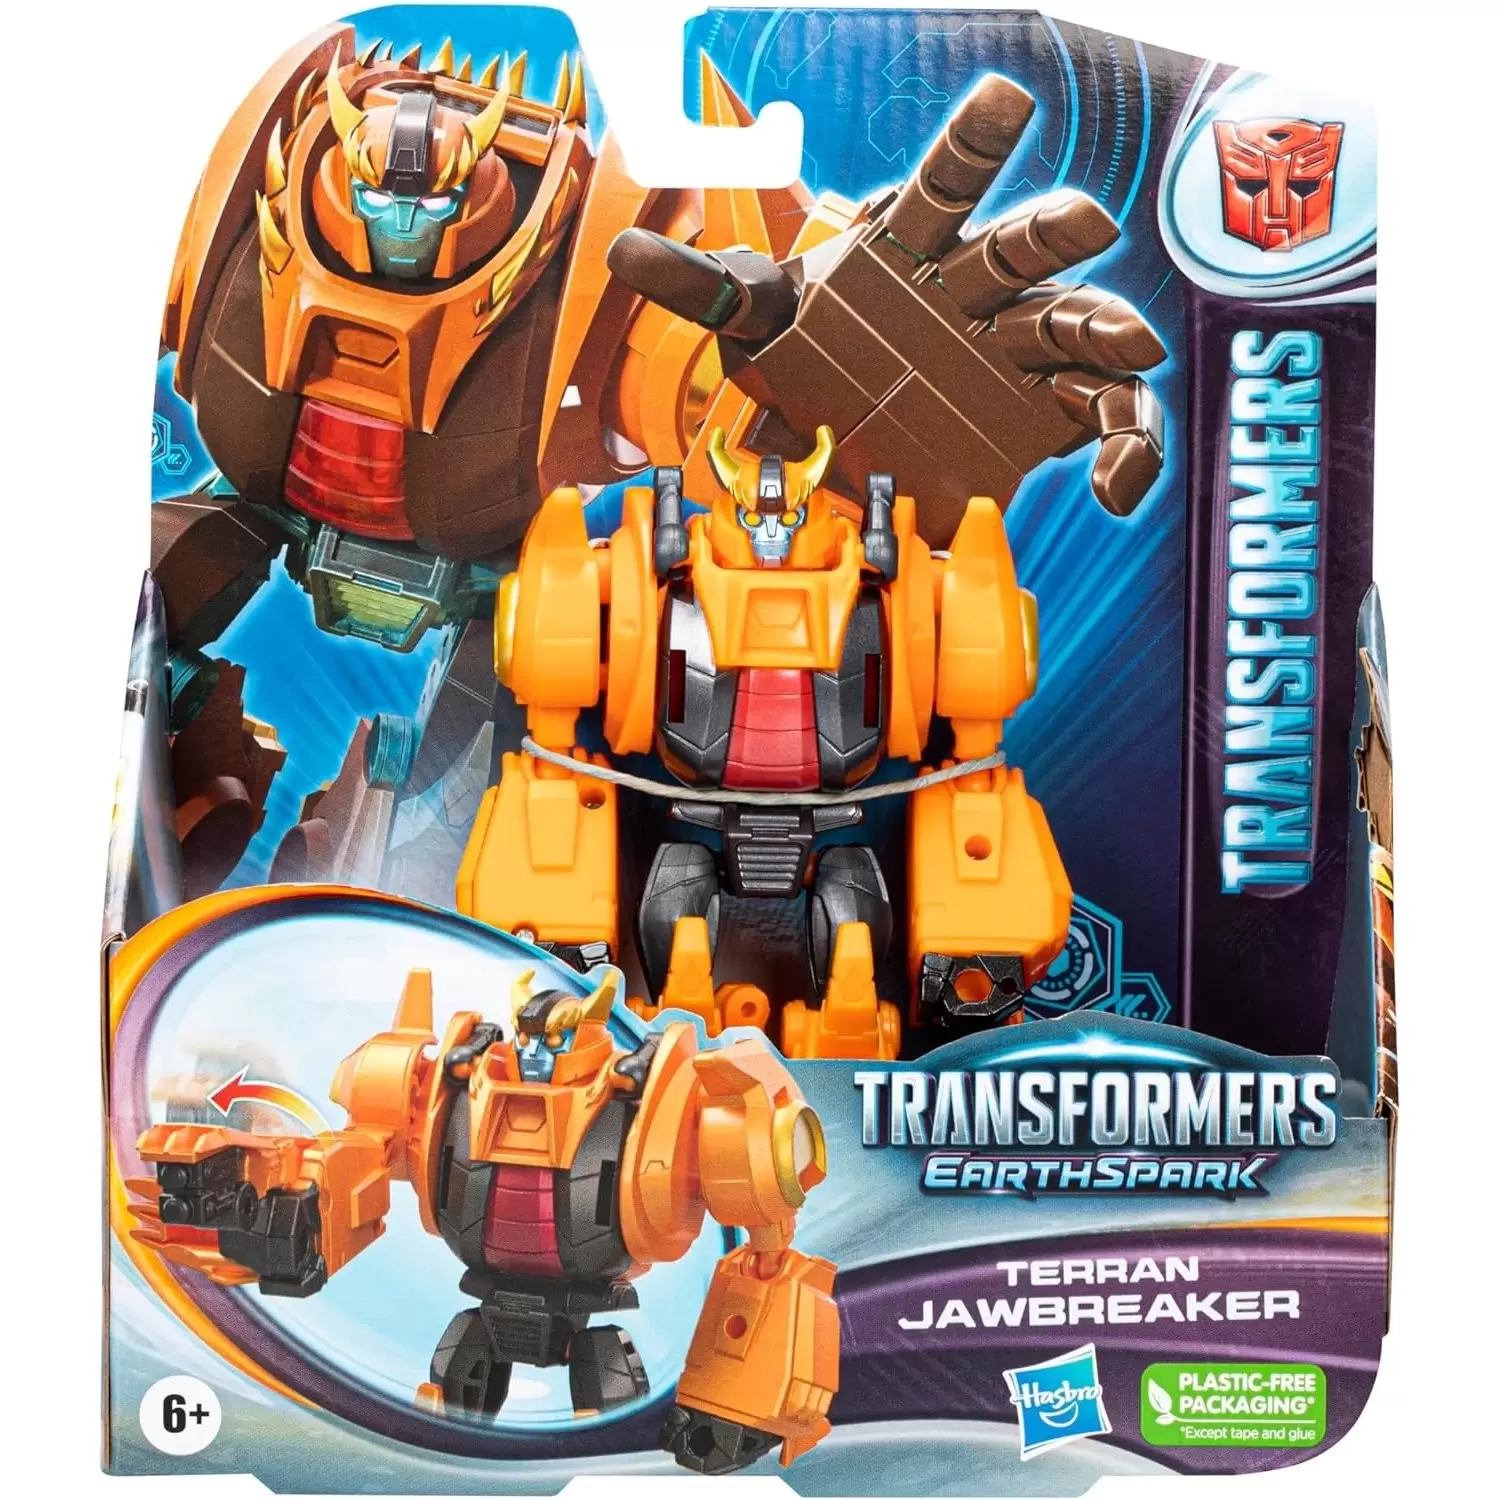 Transformers Earthspark - Terran Jawbreaker